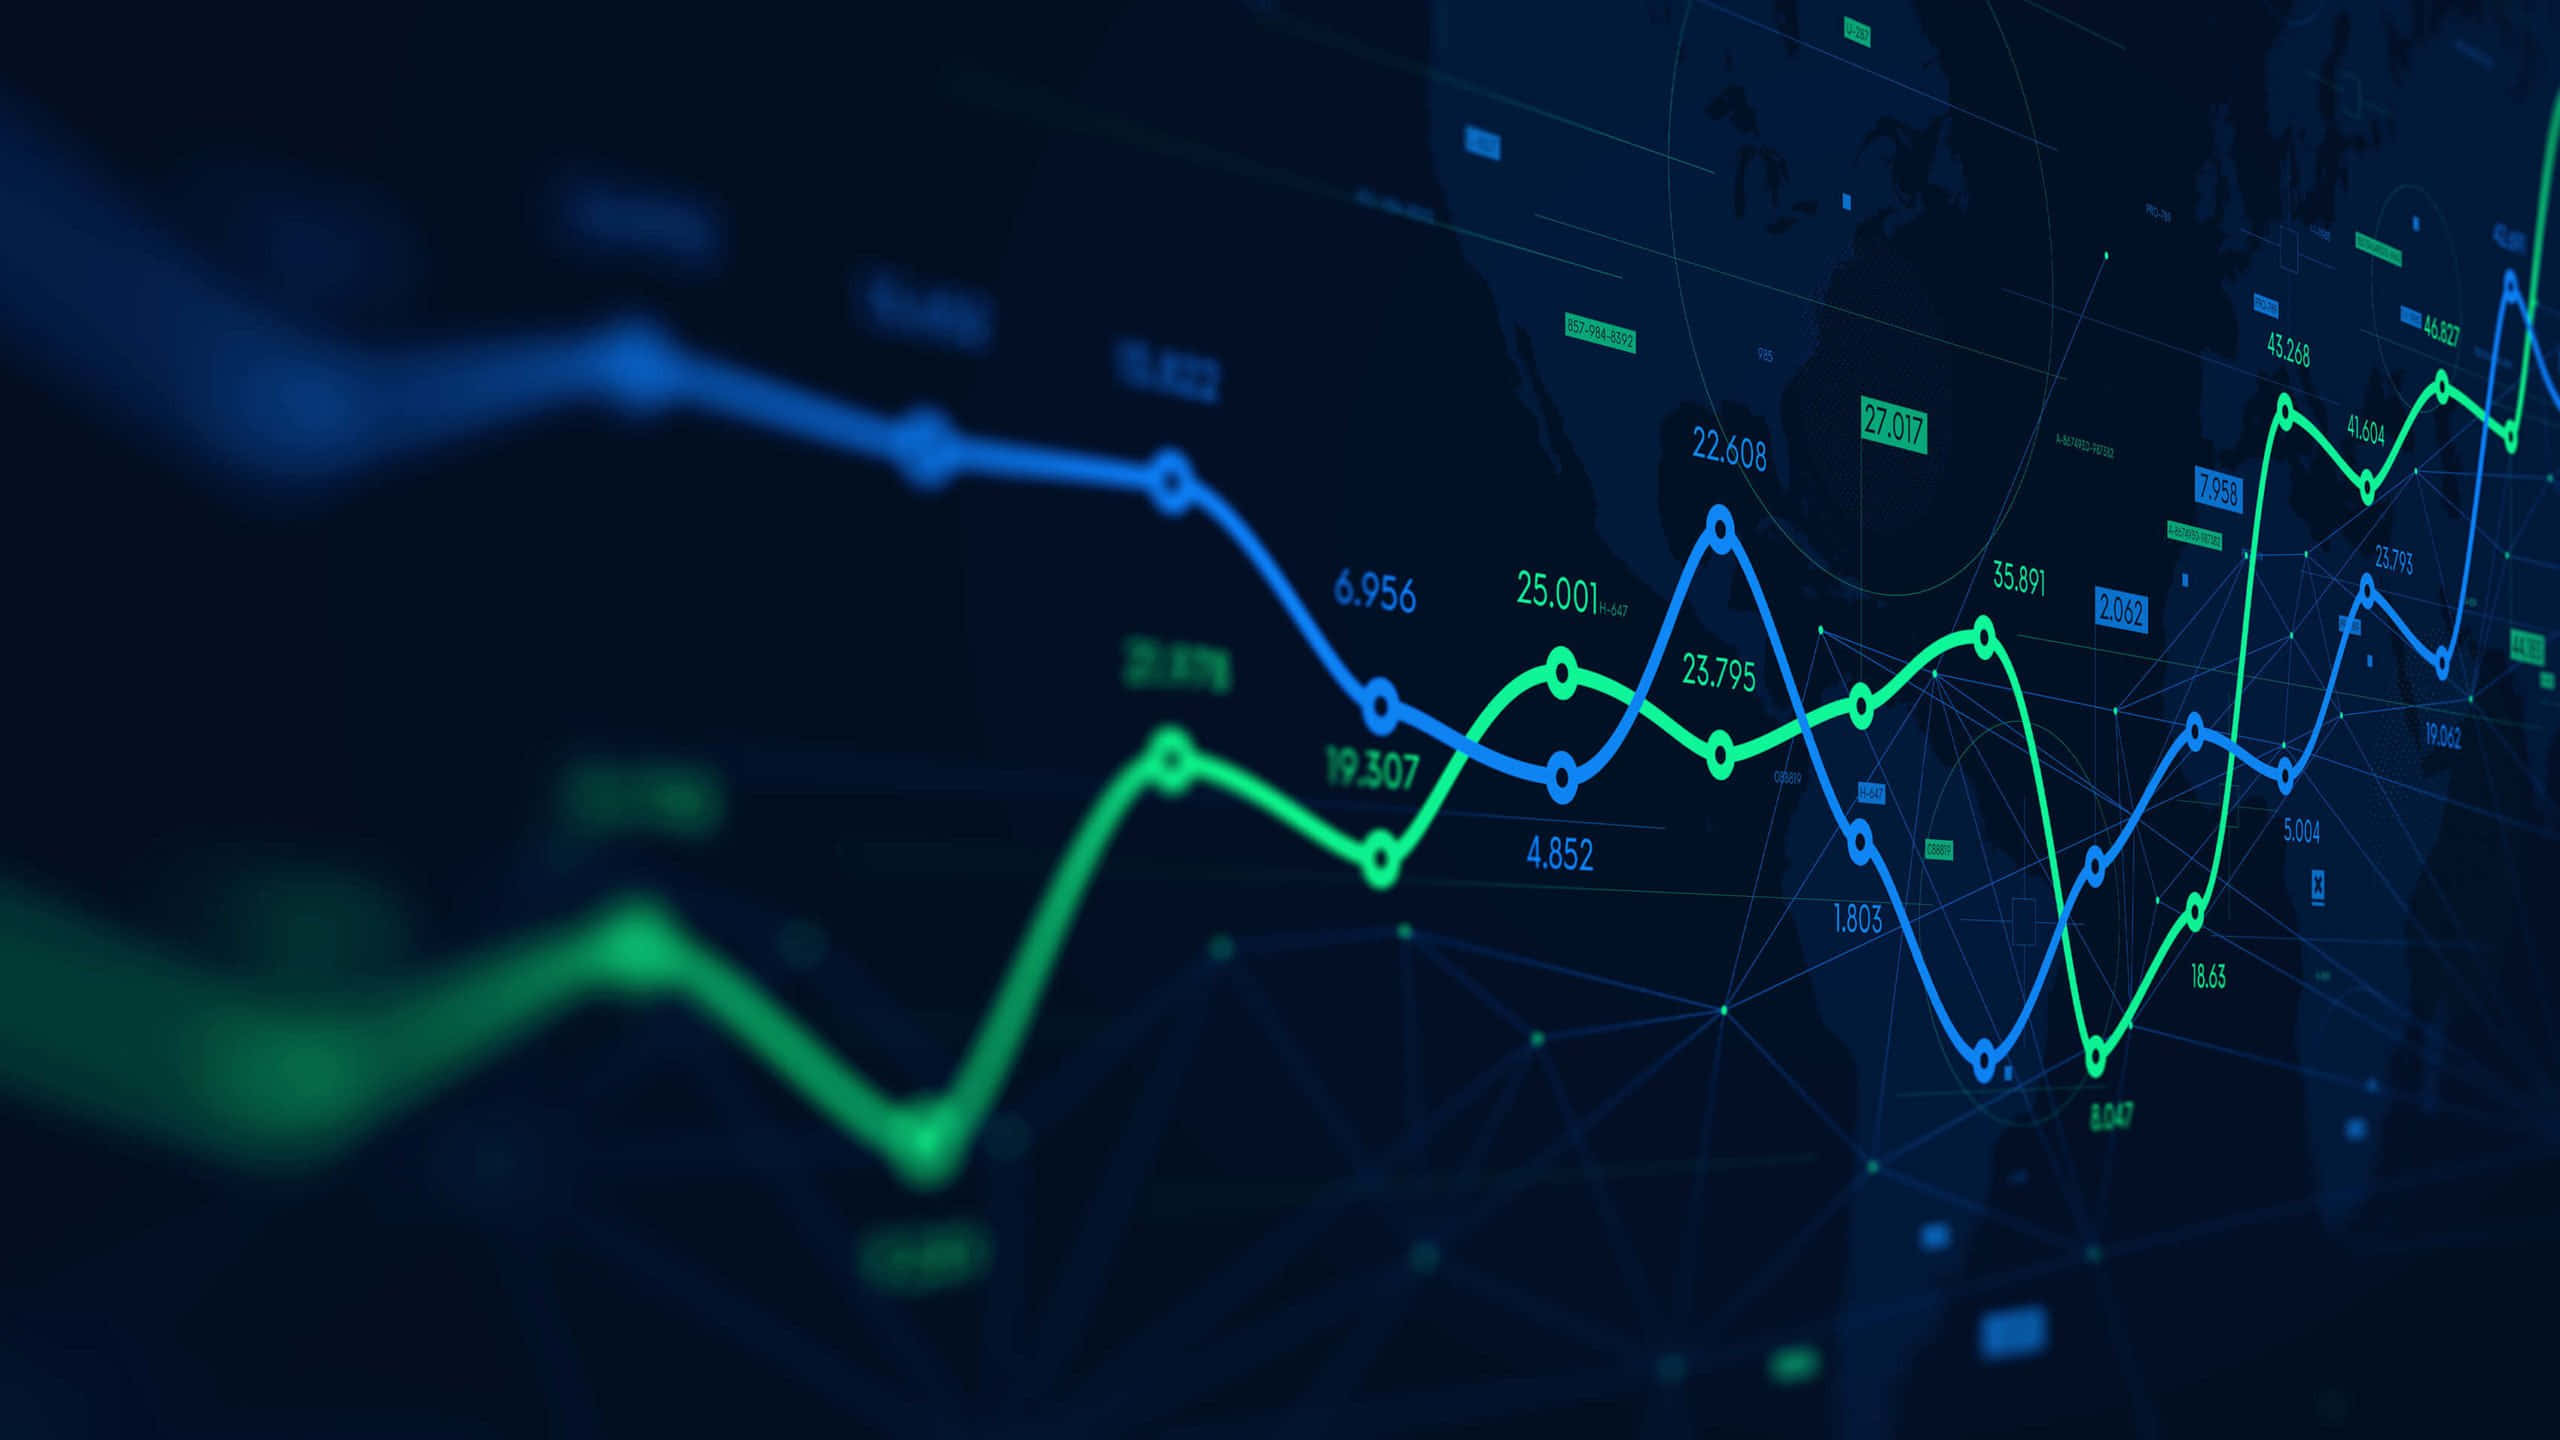 Investors analyzing financial charts and data